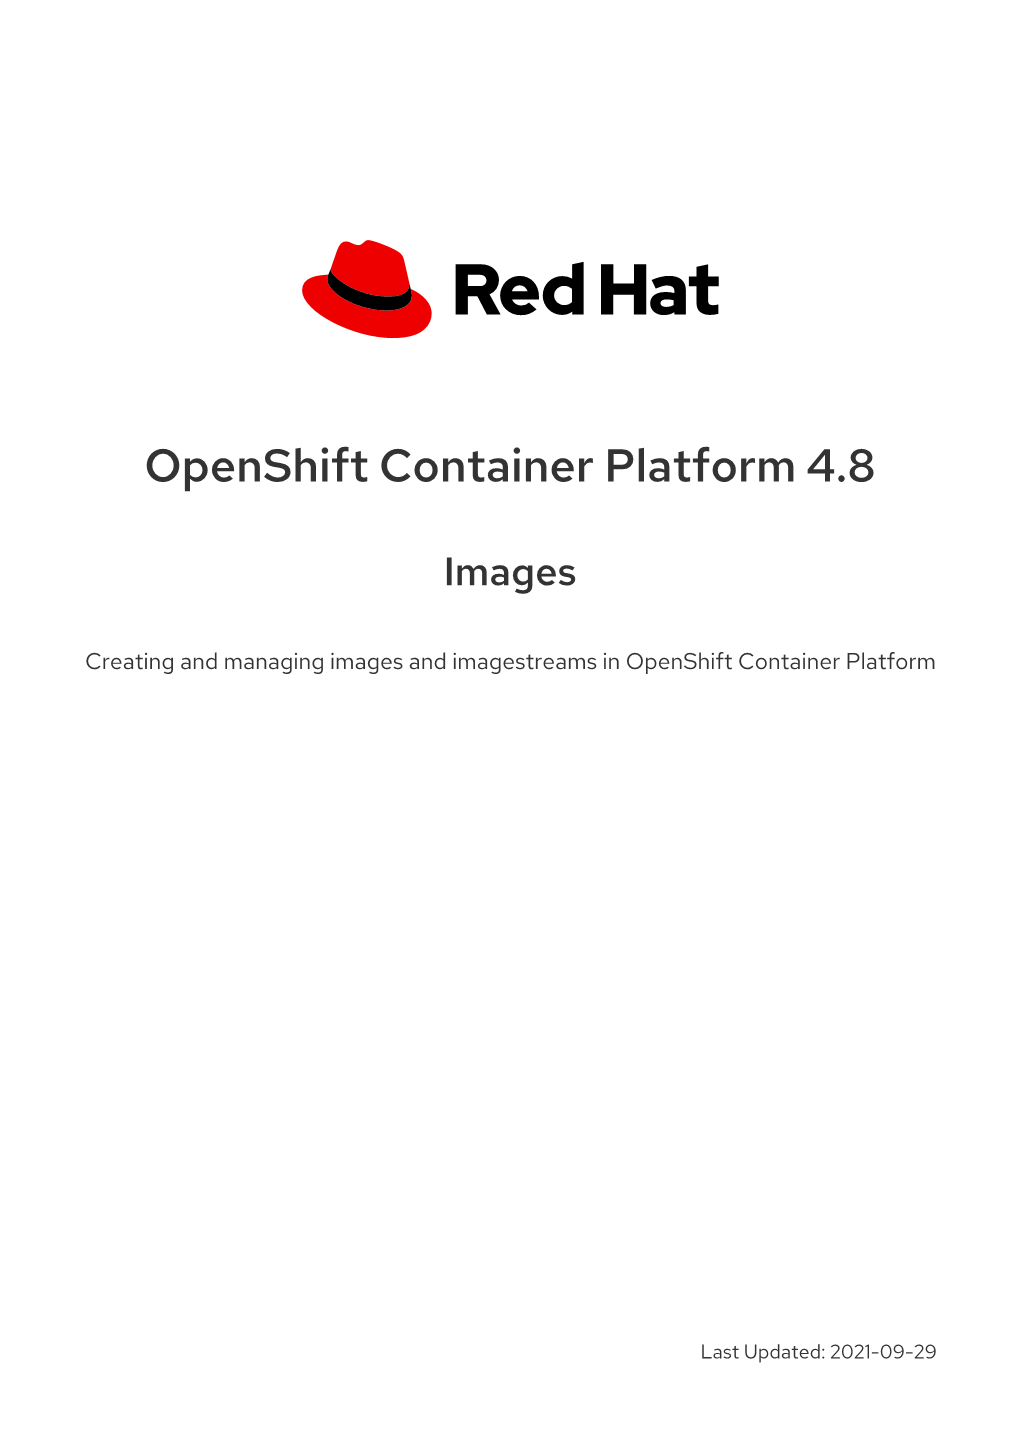 Openshift Container Platform 4.8 Images